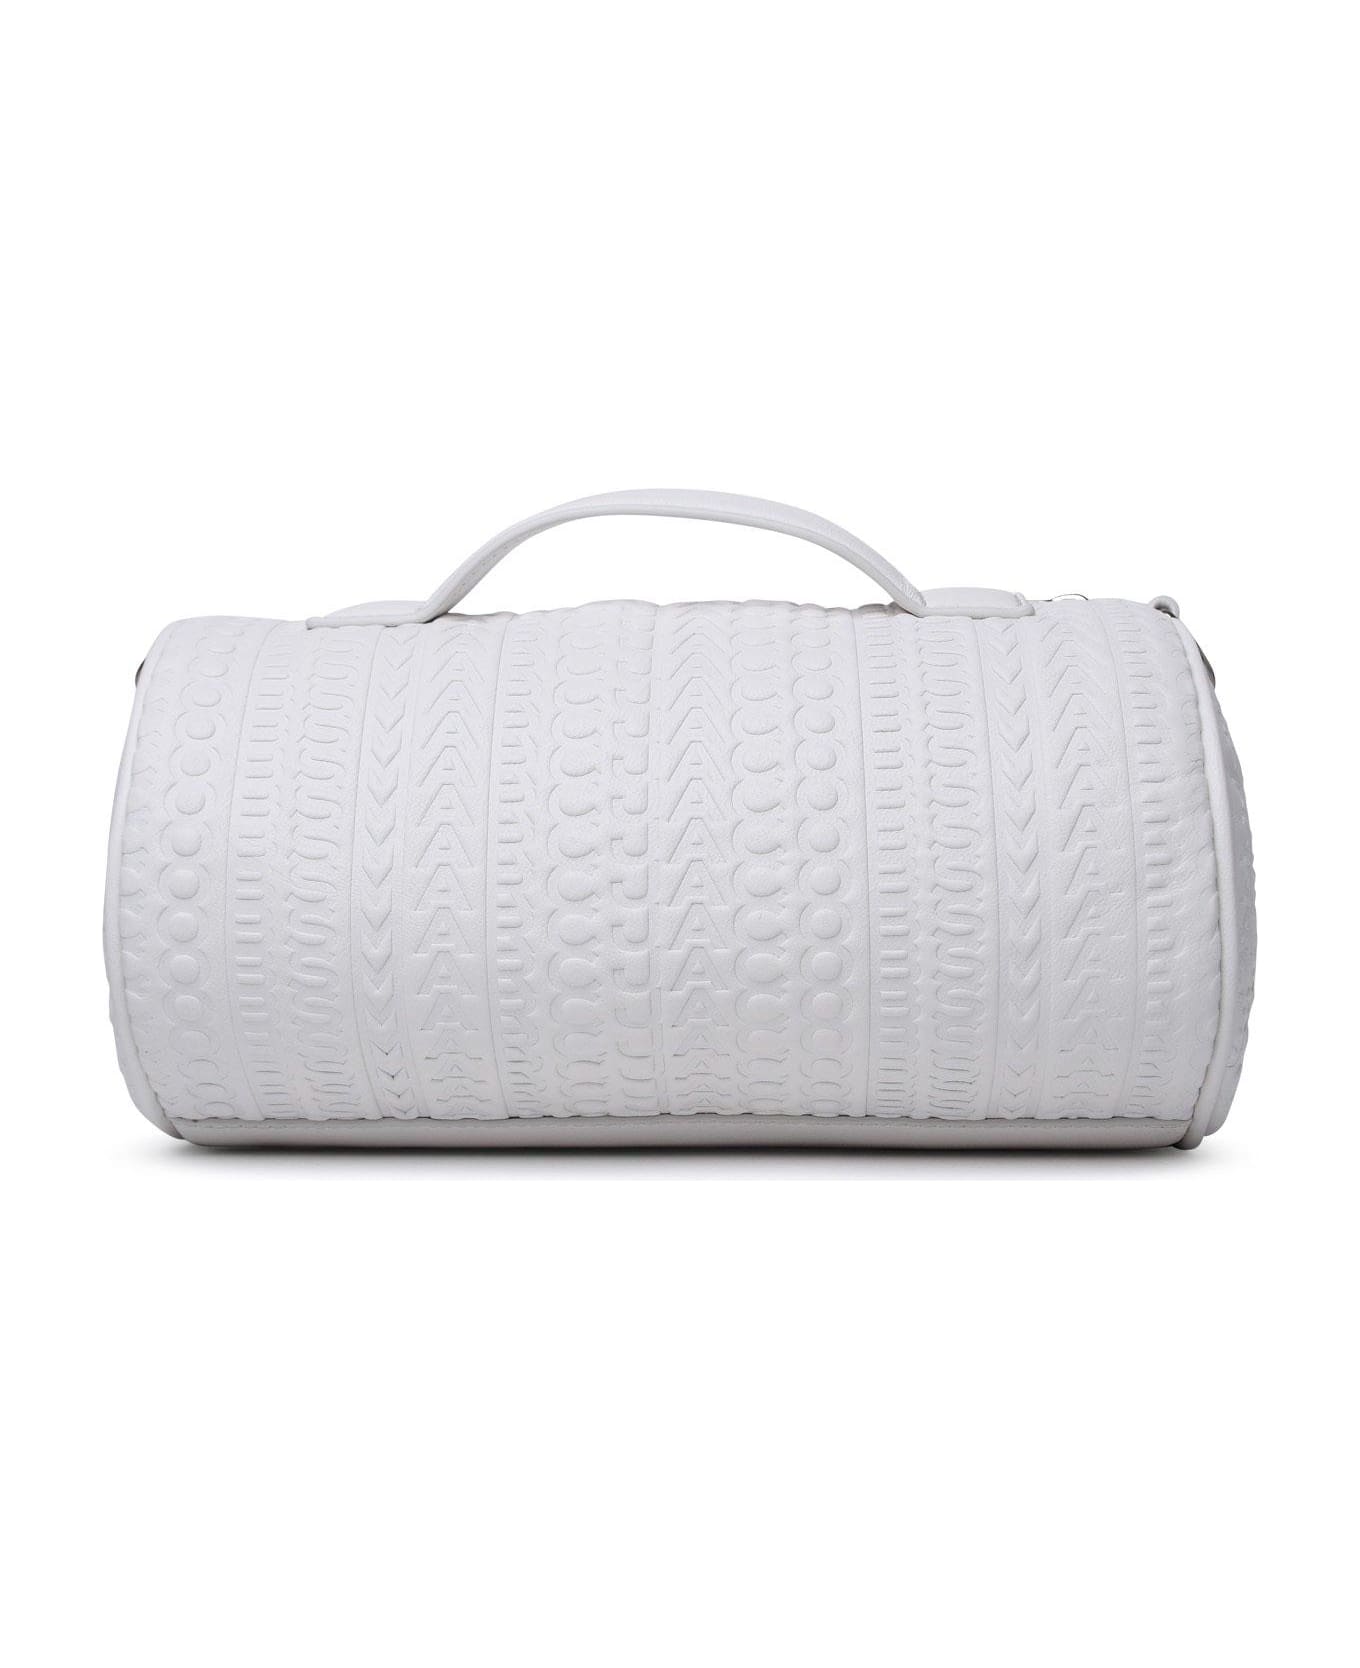 Marc Jacobs Logo Patch Duffle Bag - White